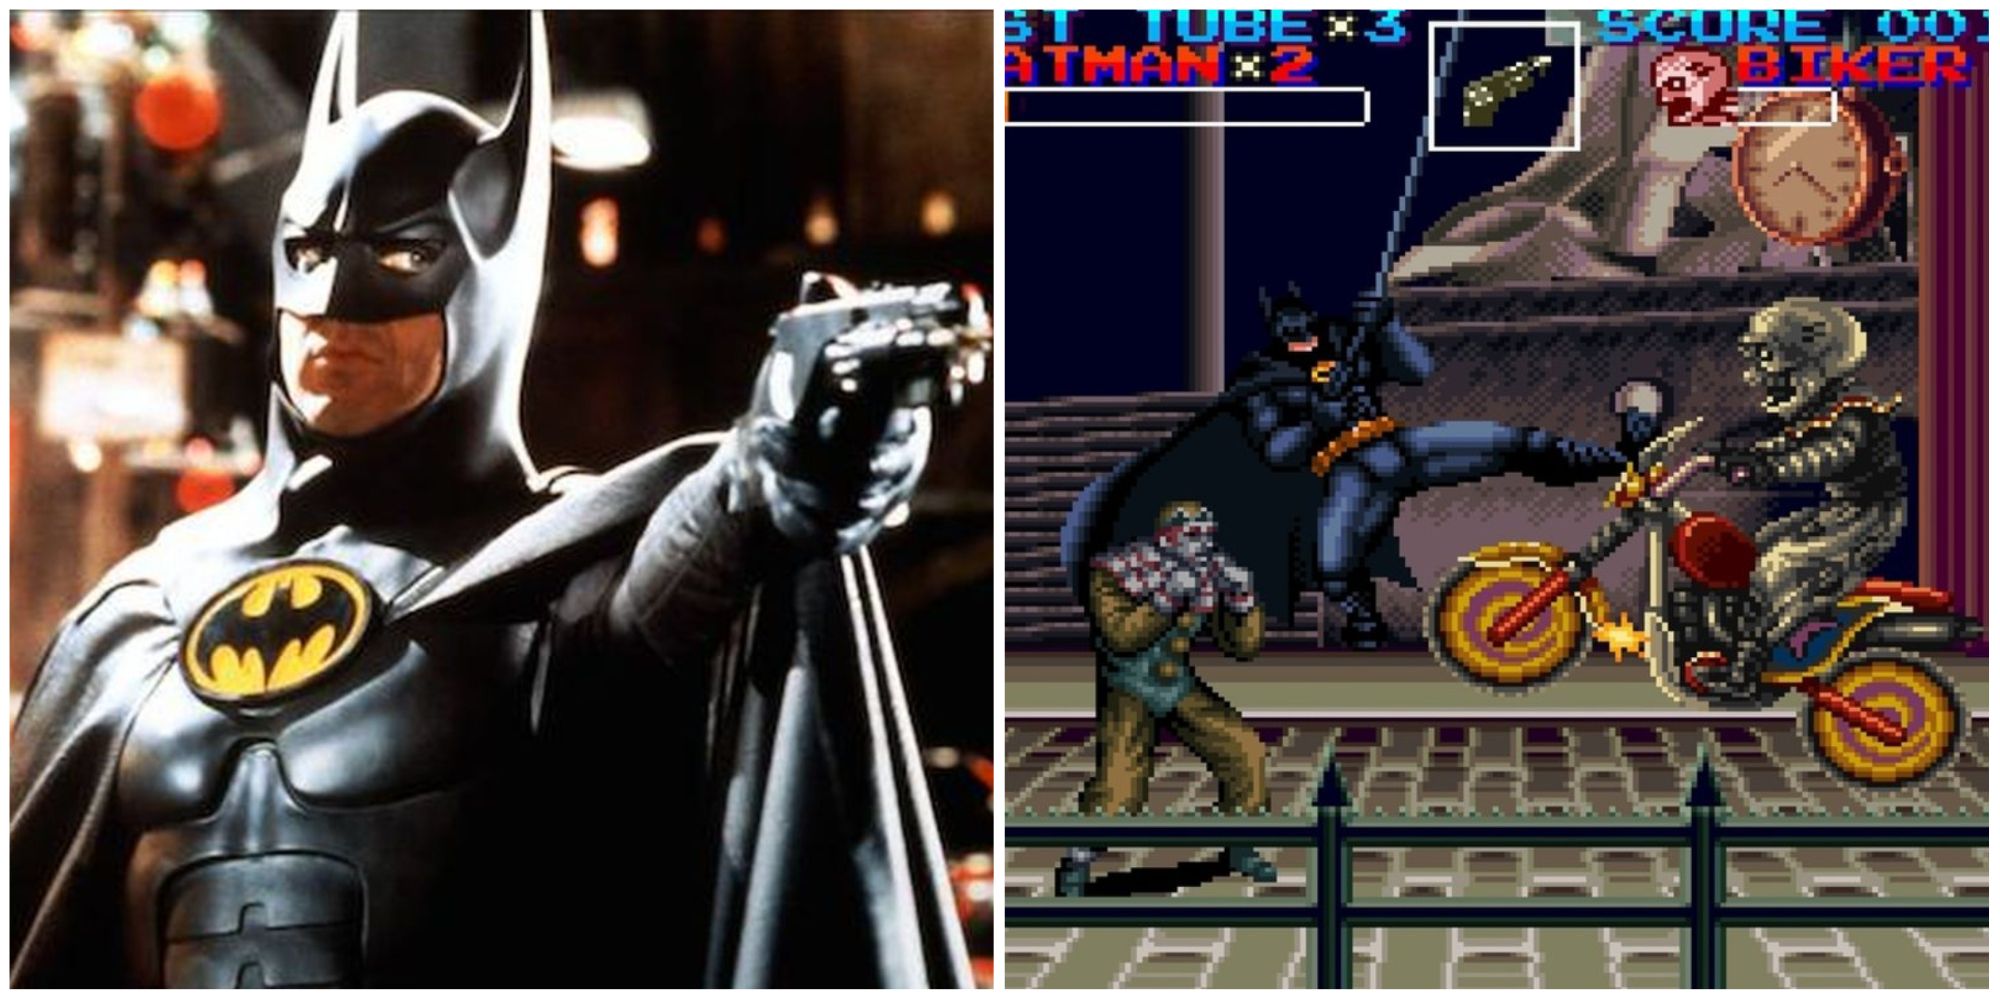 Batman From Batman Returns & Batman Returns SNES Gameplay